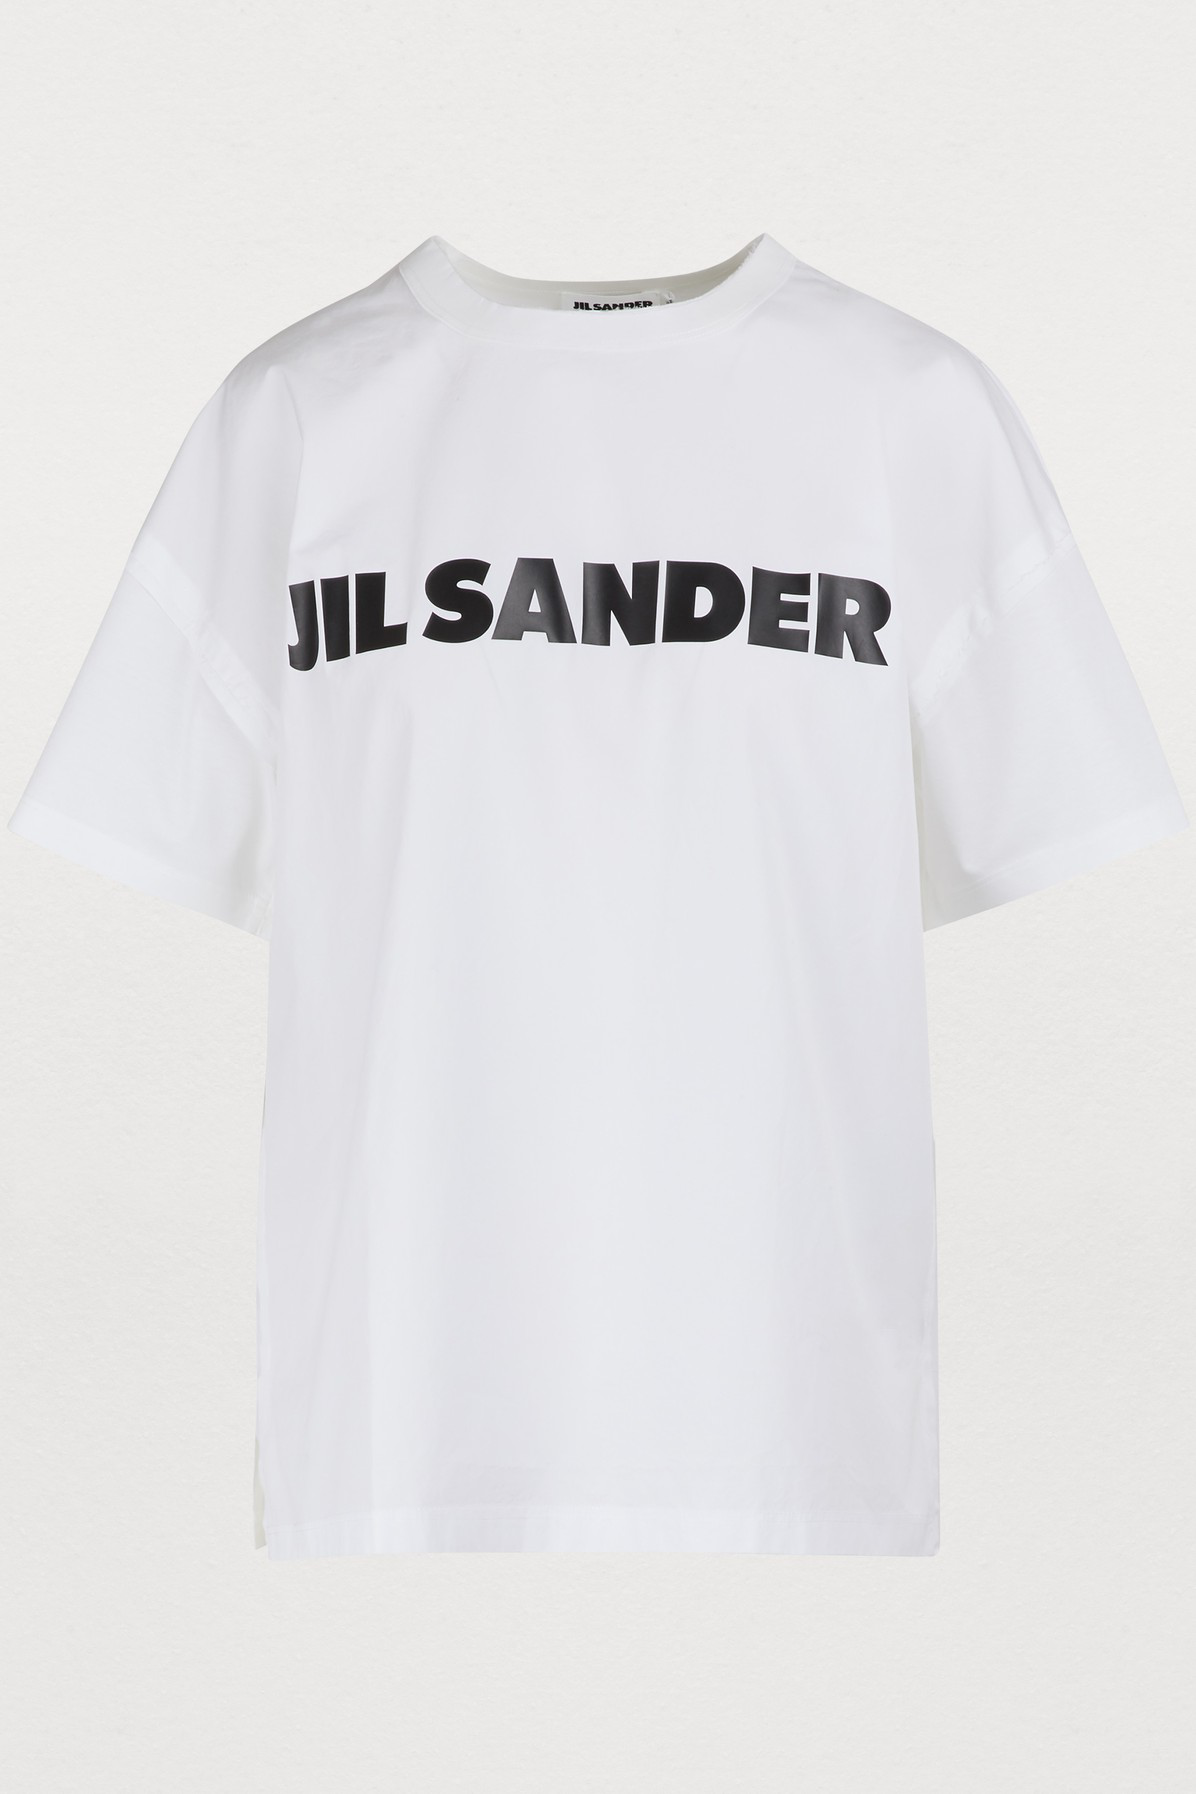 Jil Sander Logo Printed Cotton Jersey T-Shirt In White | ModeSens